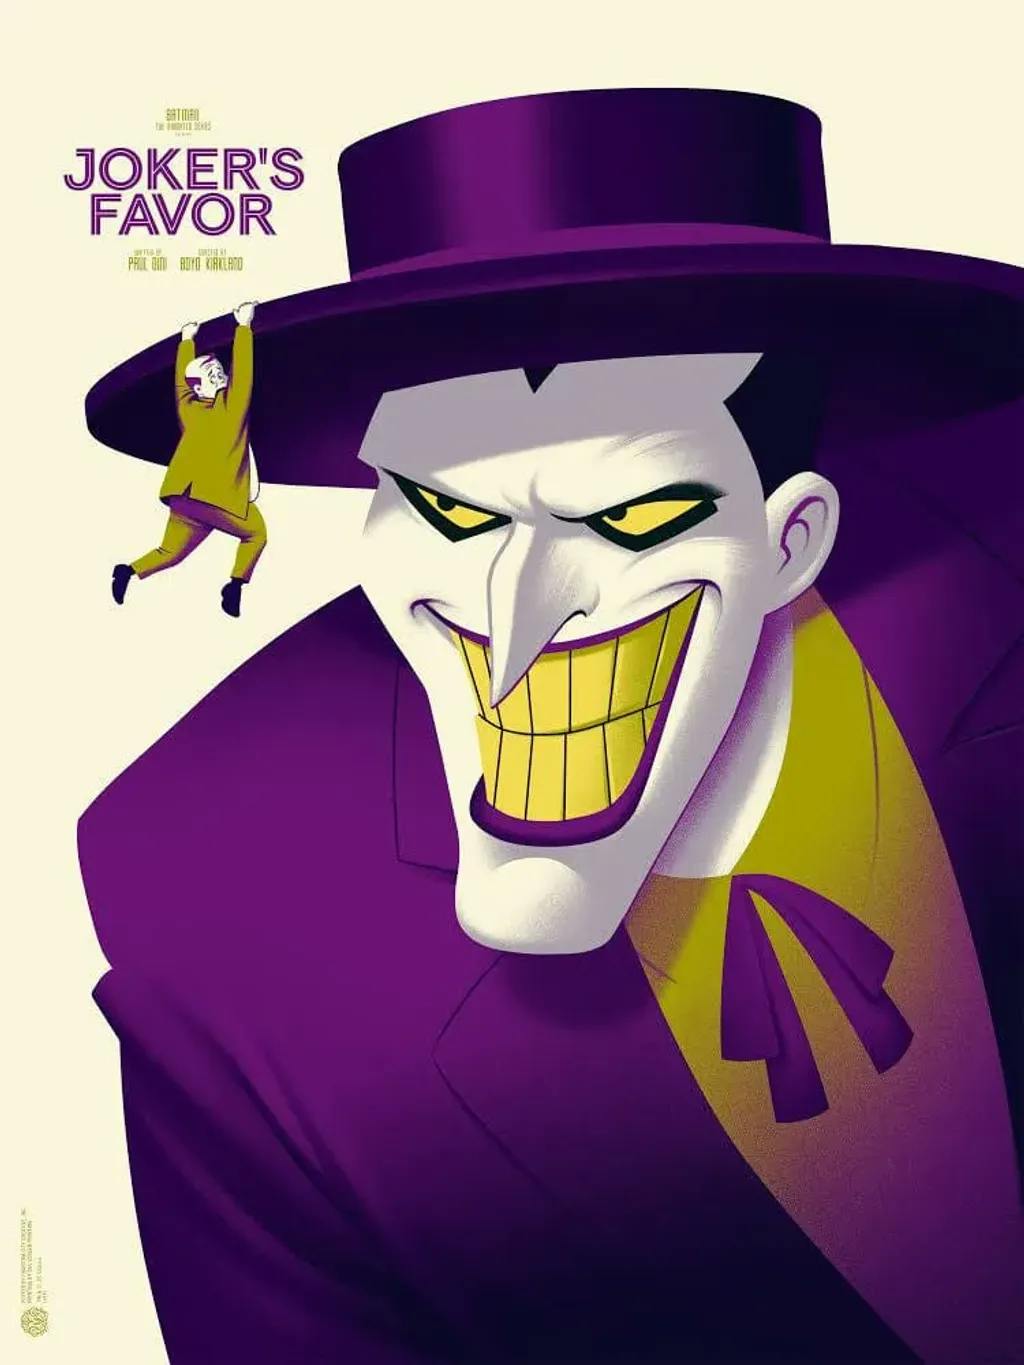 Joker’s Favor by the Phantom City Creative